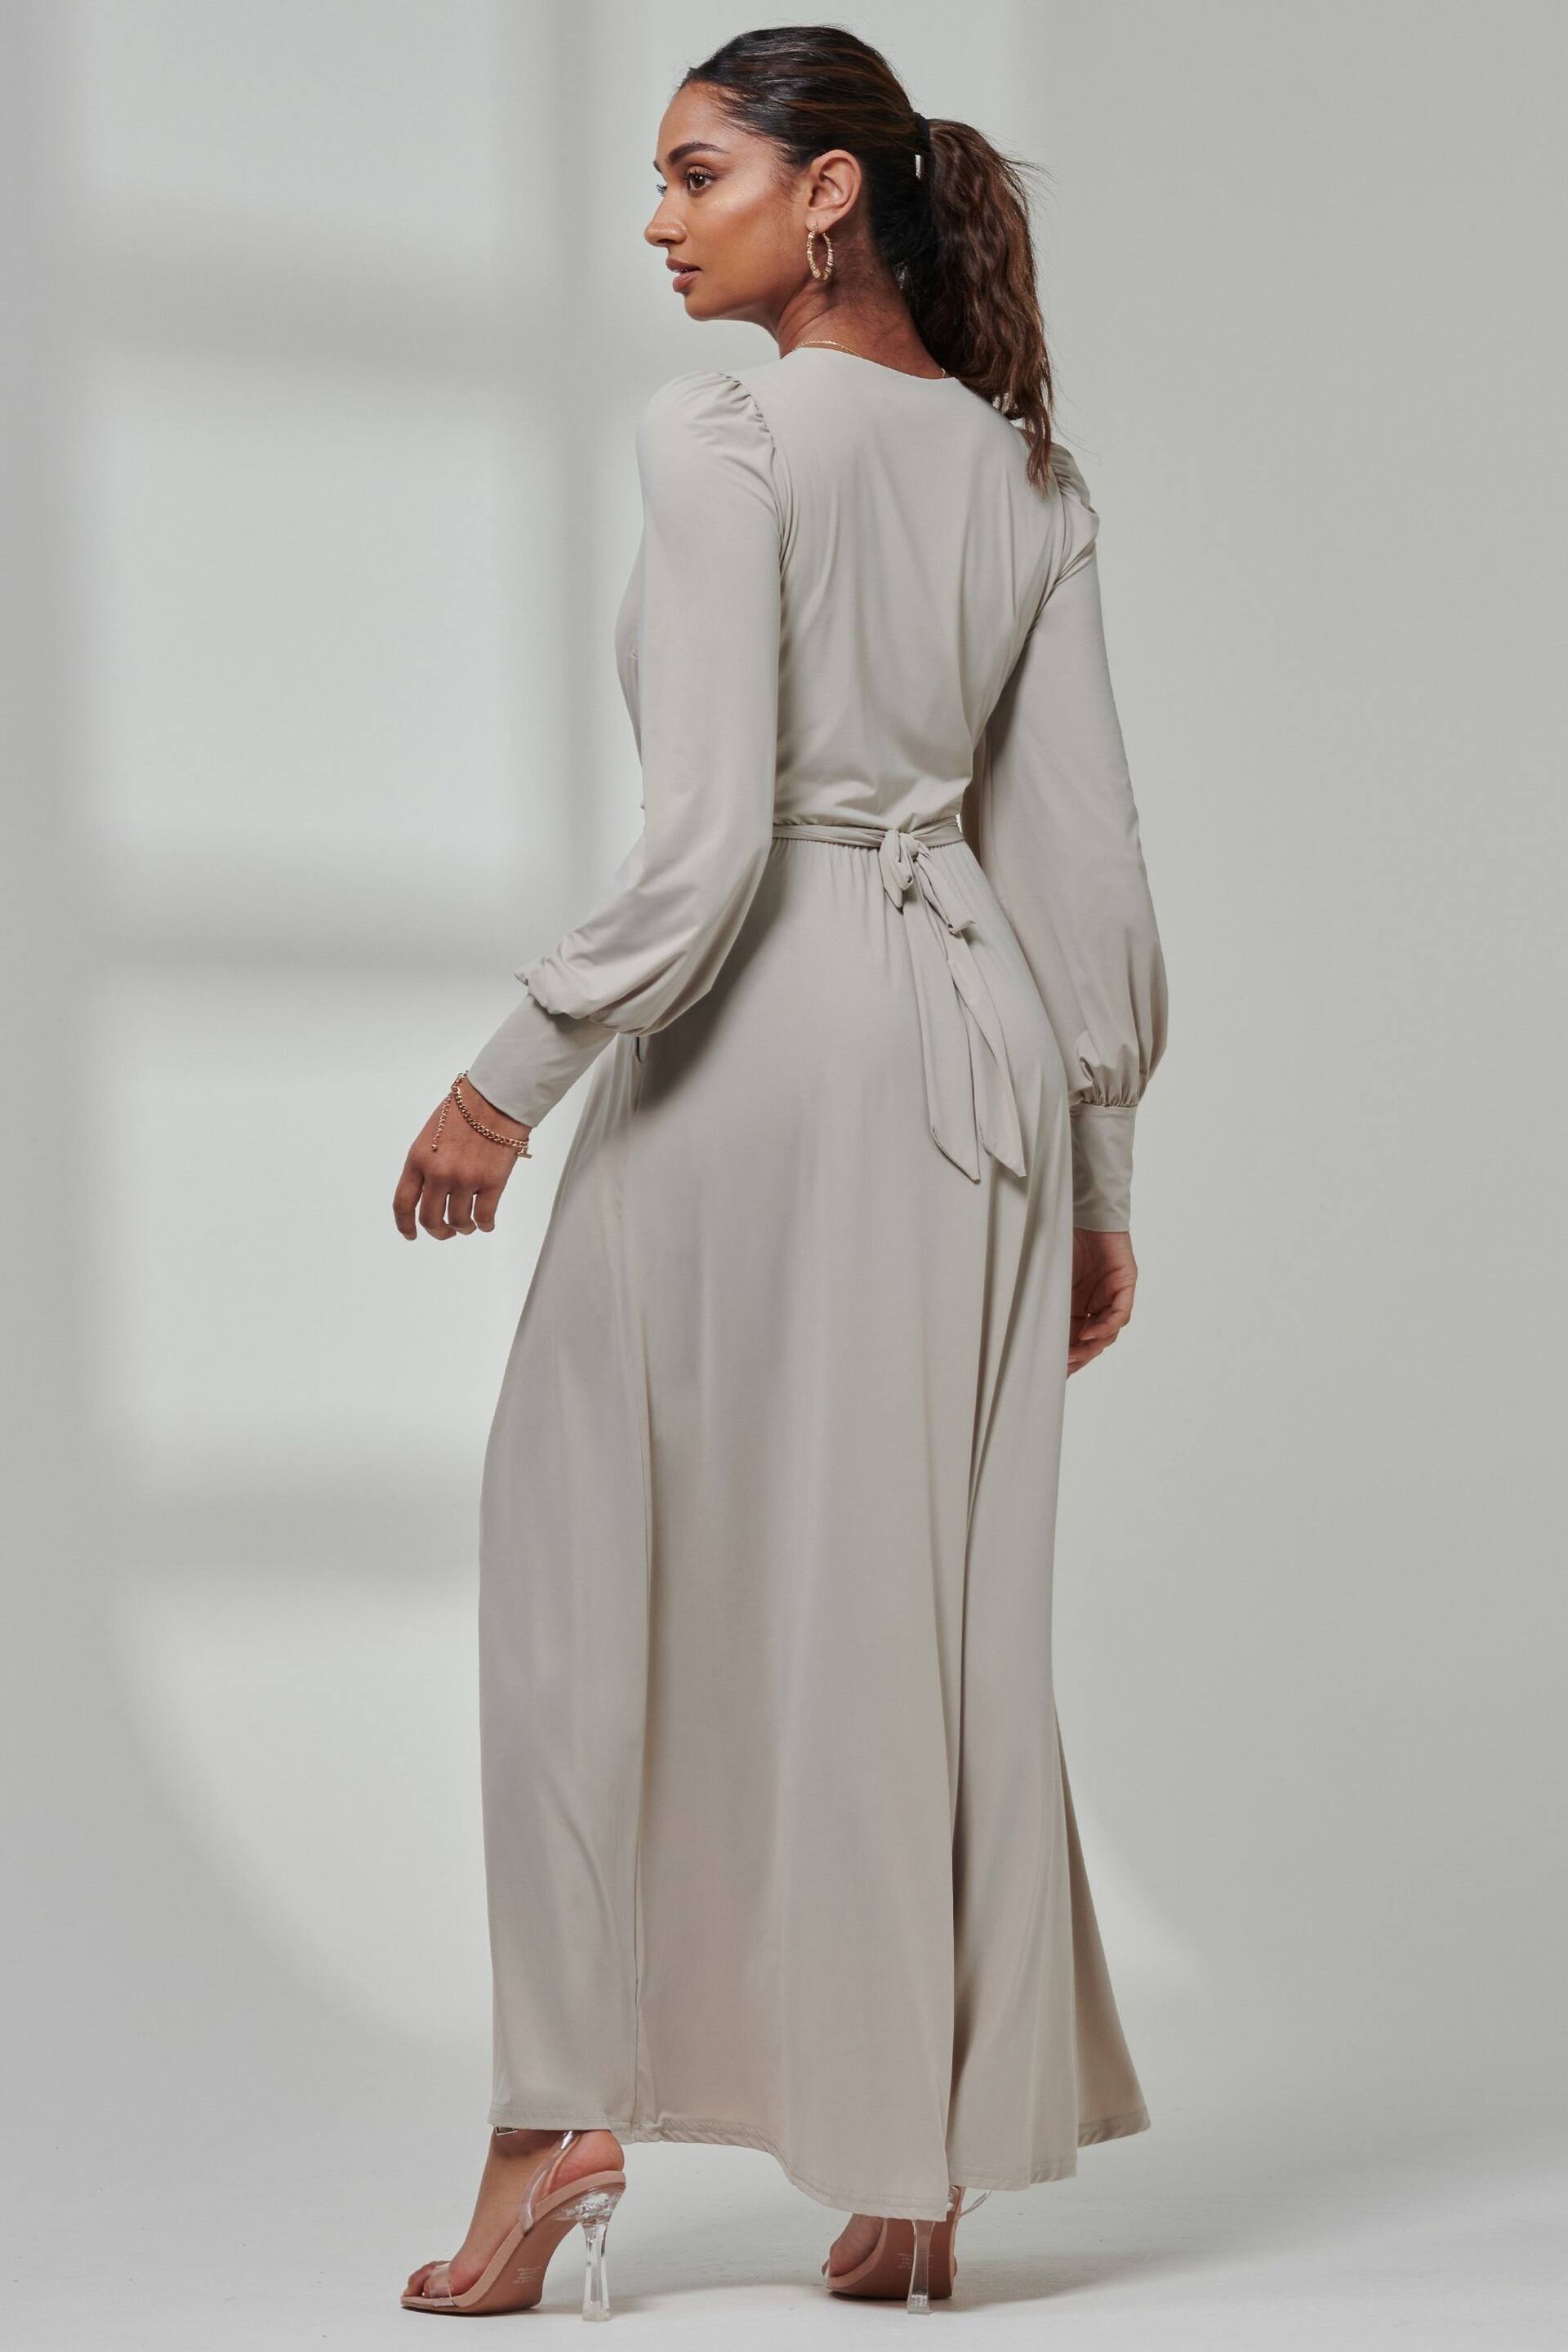 Jolie Moi Grey Giulia Long Sleeve Maxi Dress - Image 2 of 5